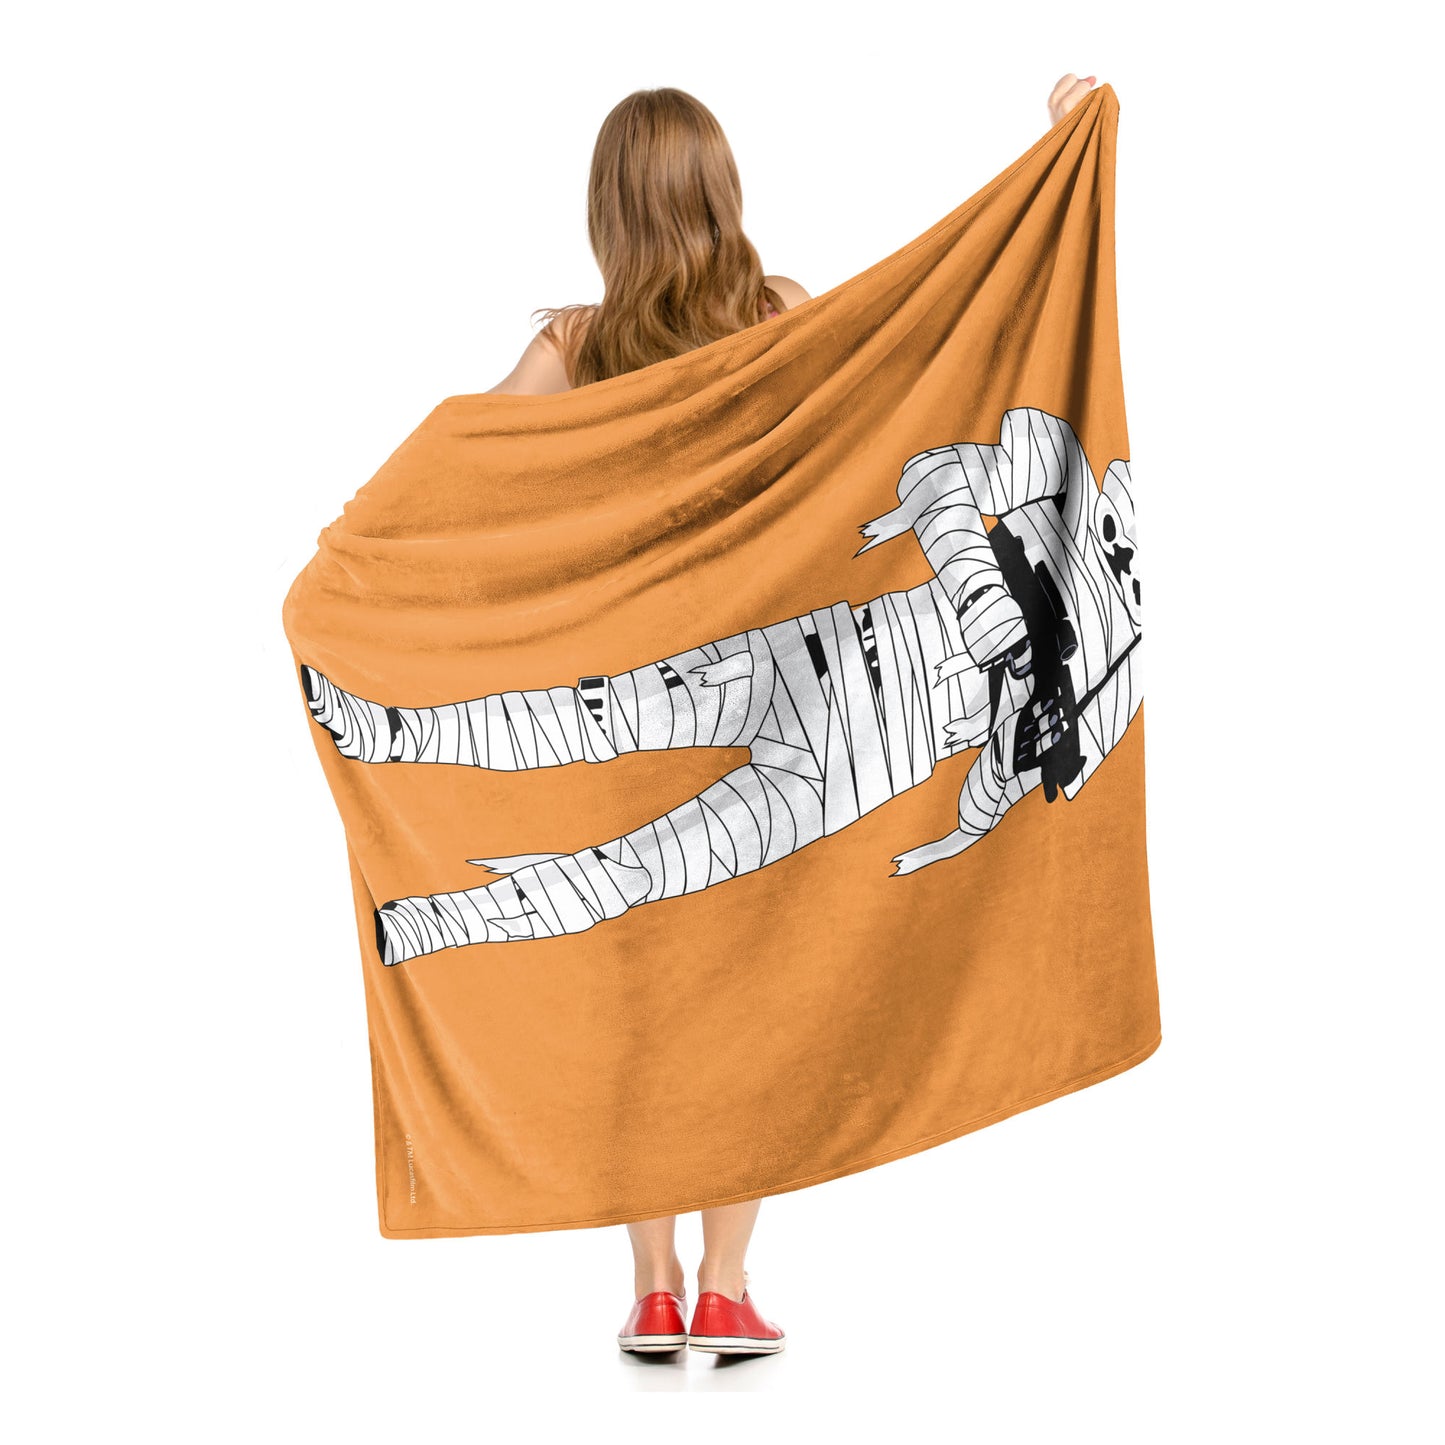 Star Wars Mummy Trooper Throw Blanket 50"x60"